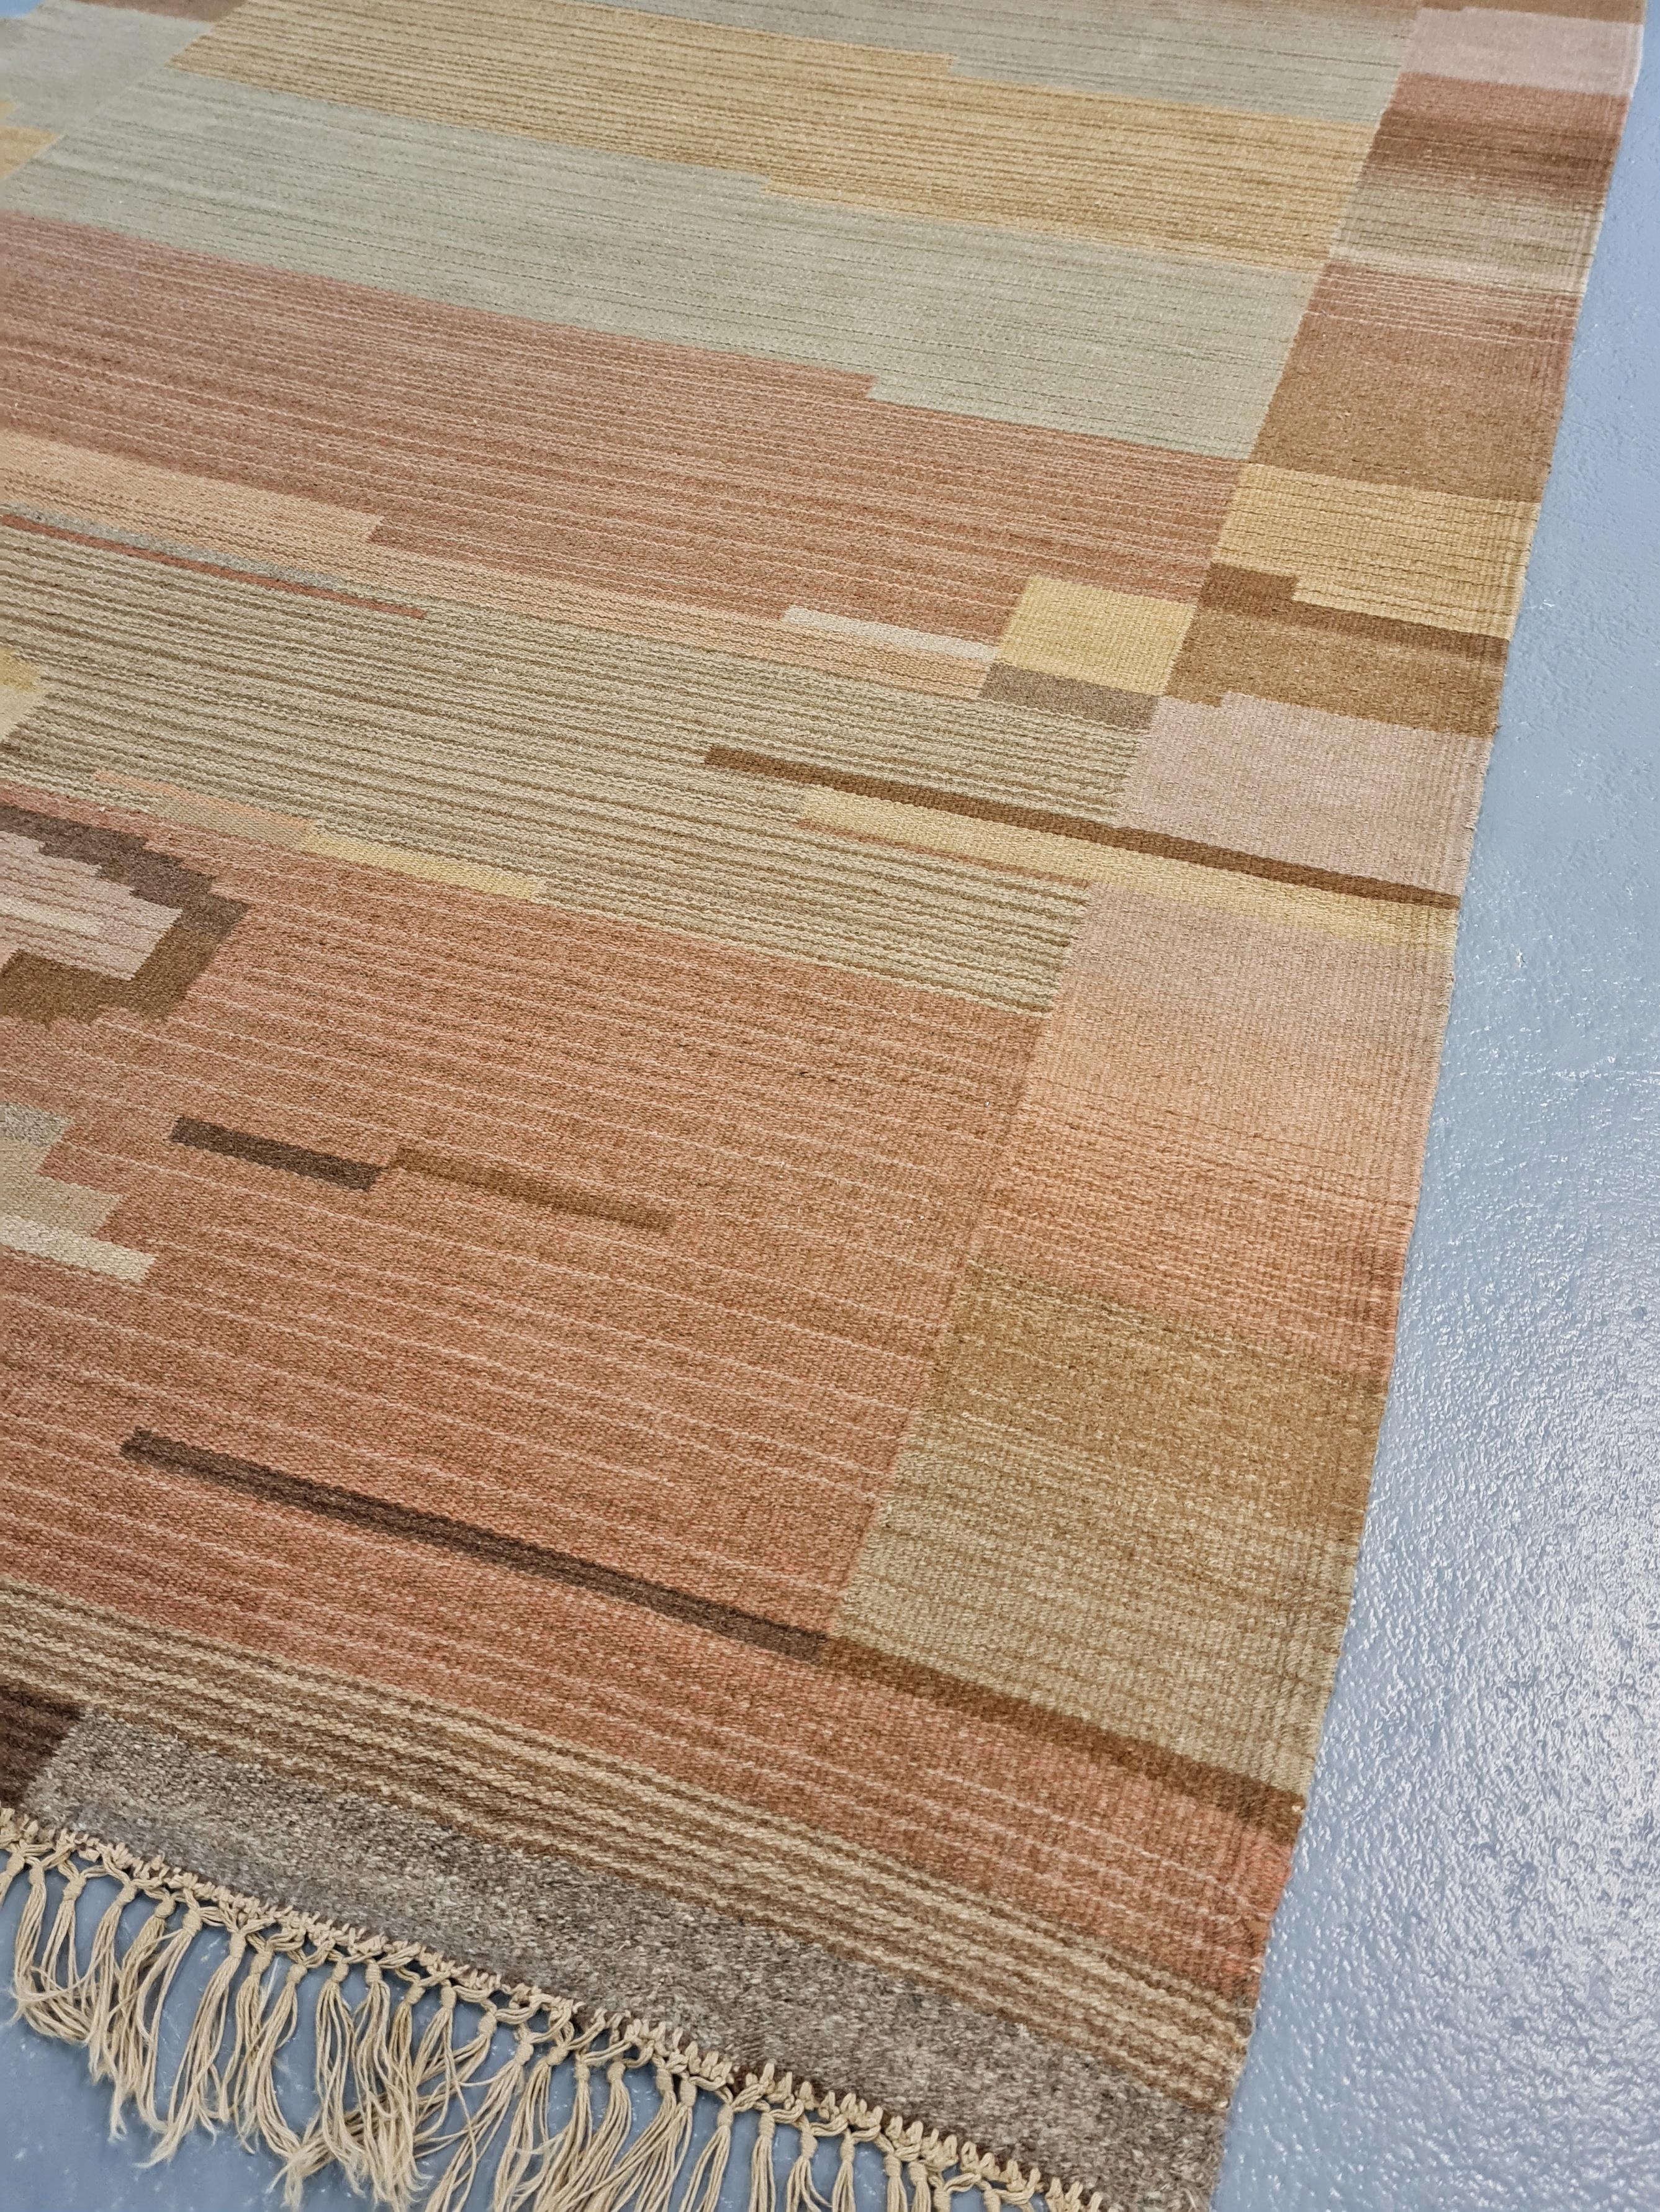 20th Century Greta Skogster-Lehtinen, Finnish Flat-Weave Carpet For Sale